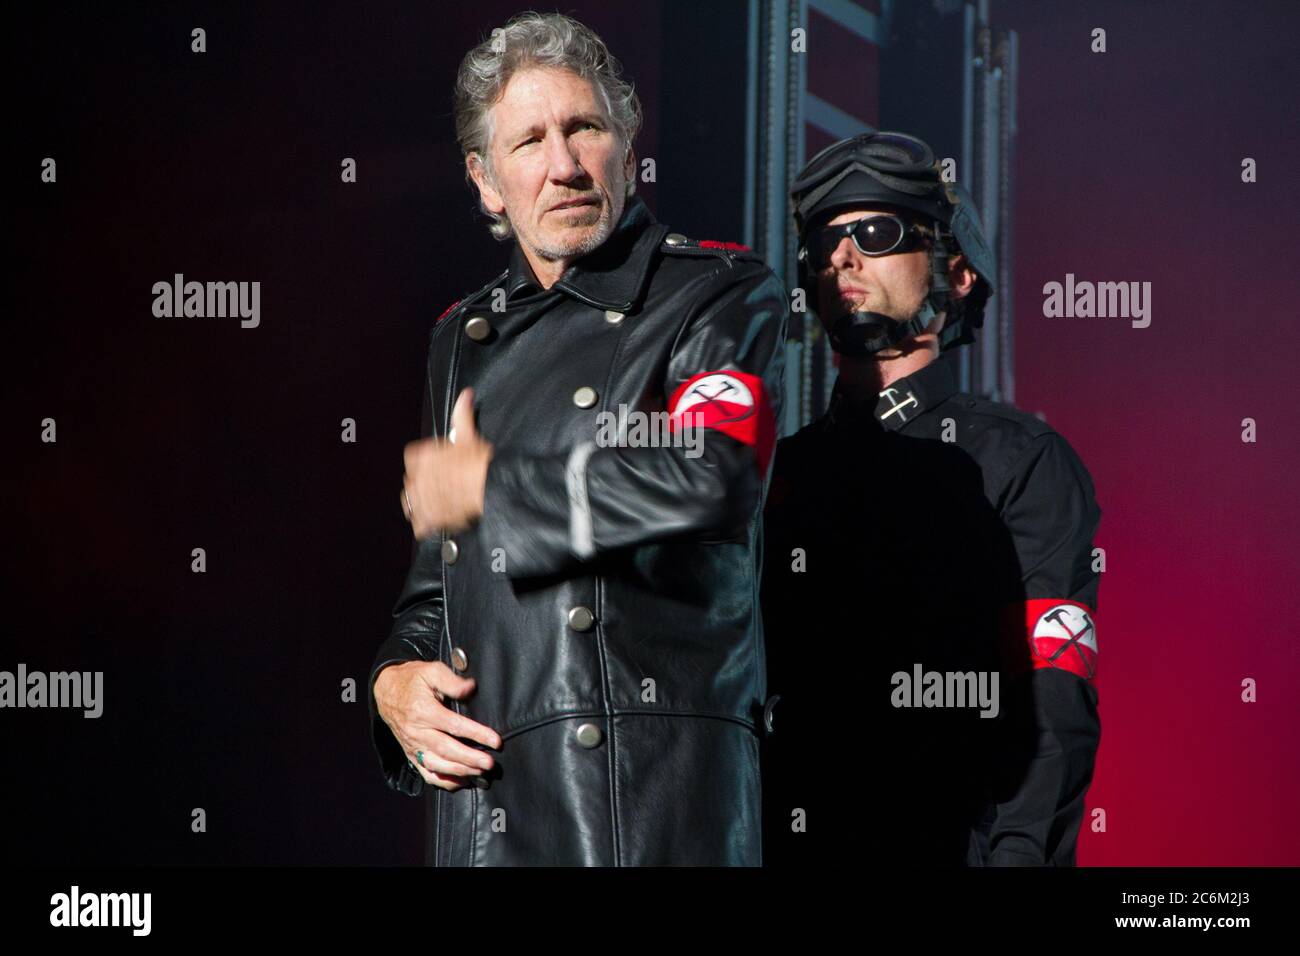 RIO DE JANEIRO, 29.03.2012: Roger Waters suona nello stadio Joao Havelange di Rio de Janeiro (Néstor J. Beremblum / Alamy News) Foto Stock